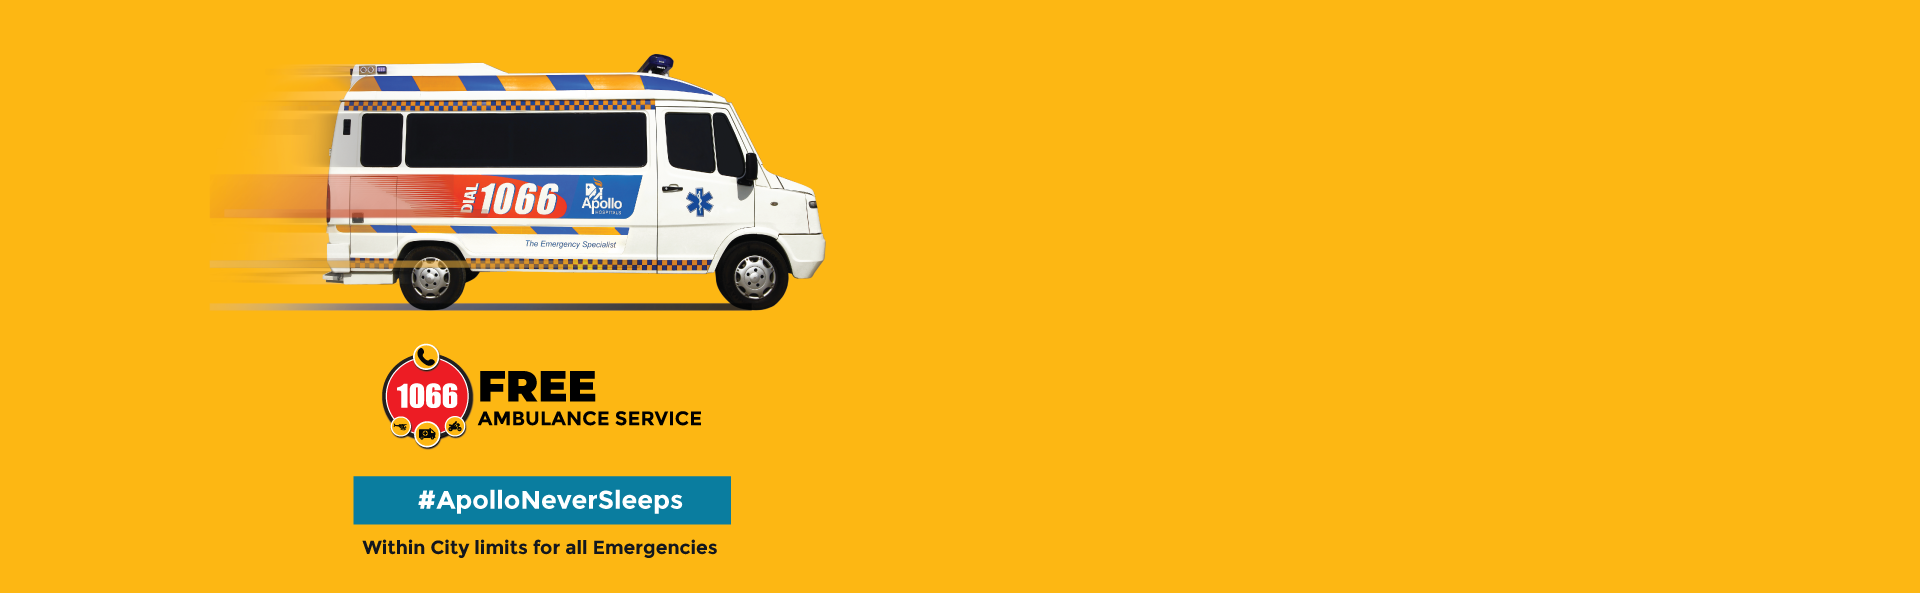 emergency free ambulance